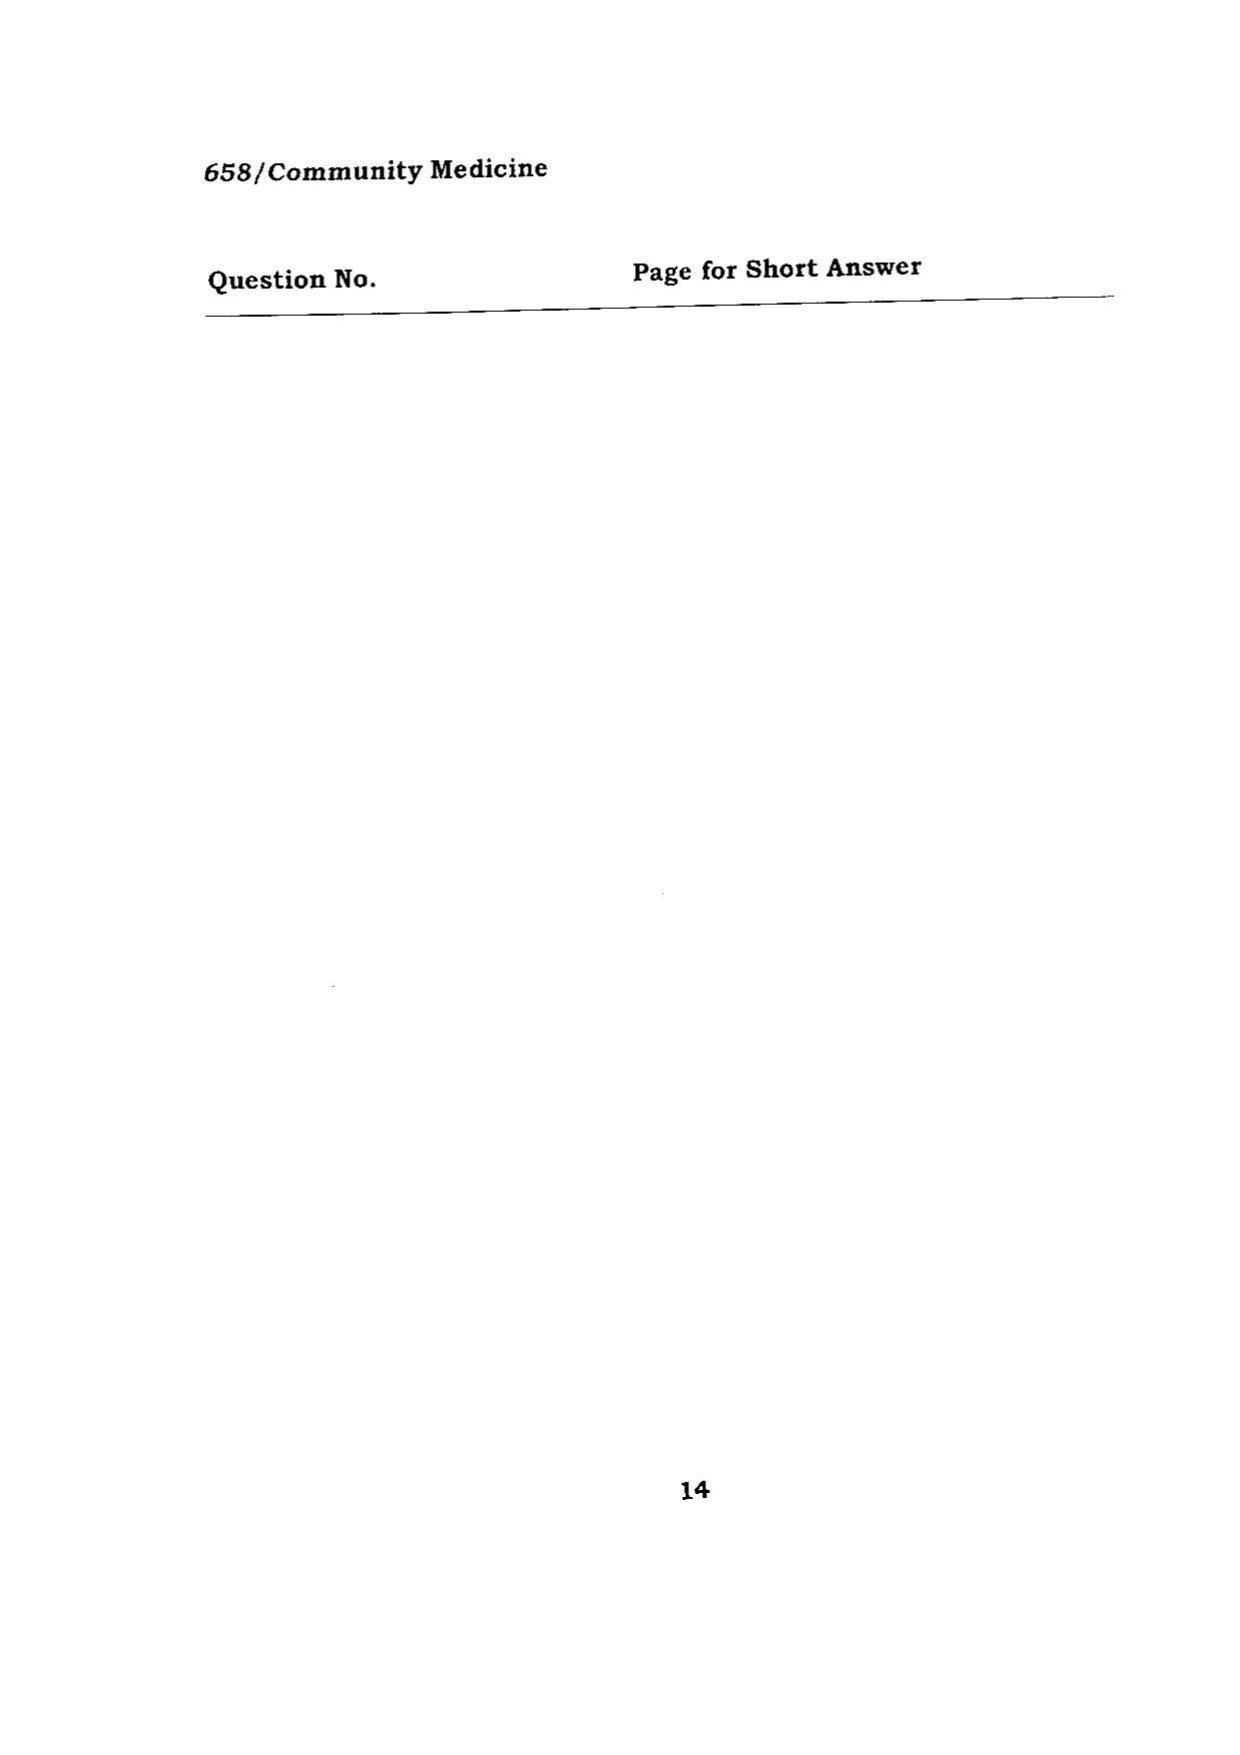 BHU RET COMMUNITY MEDICINE 2015 Question Paper - Page 14